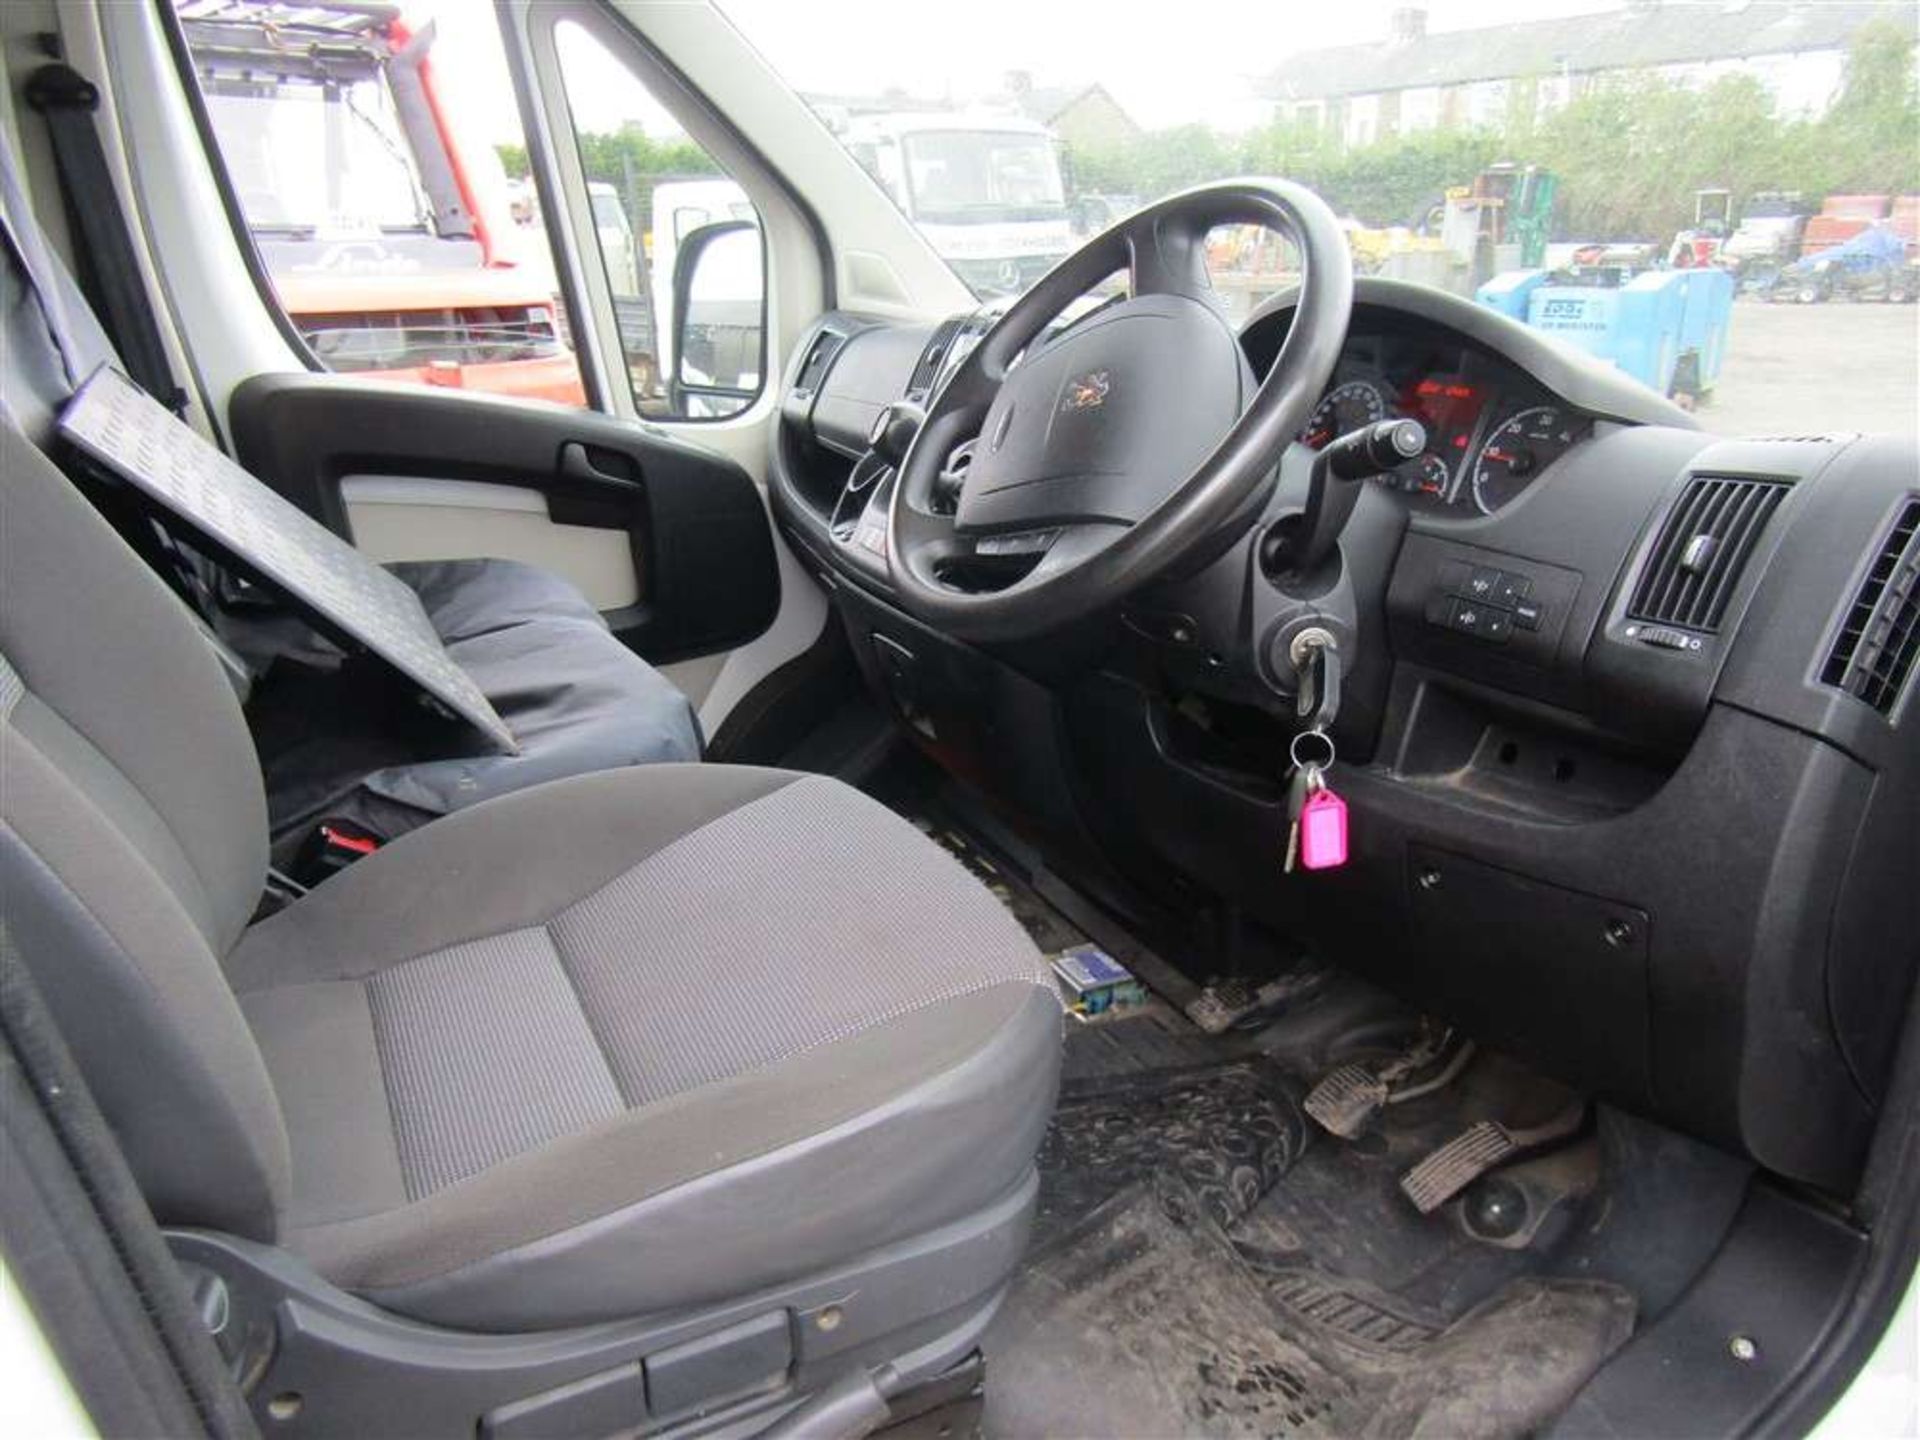 2013 63 Reg Peugeot Boxer 330 L1H1 HDI Panel Van (Direct Council) - Image 6 of 7